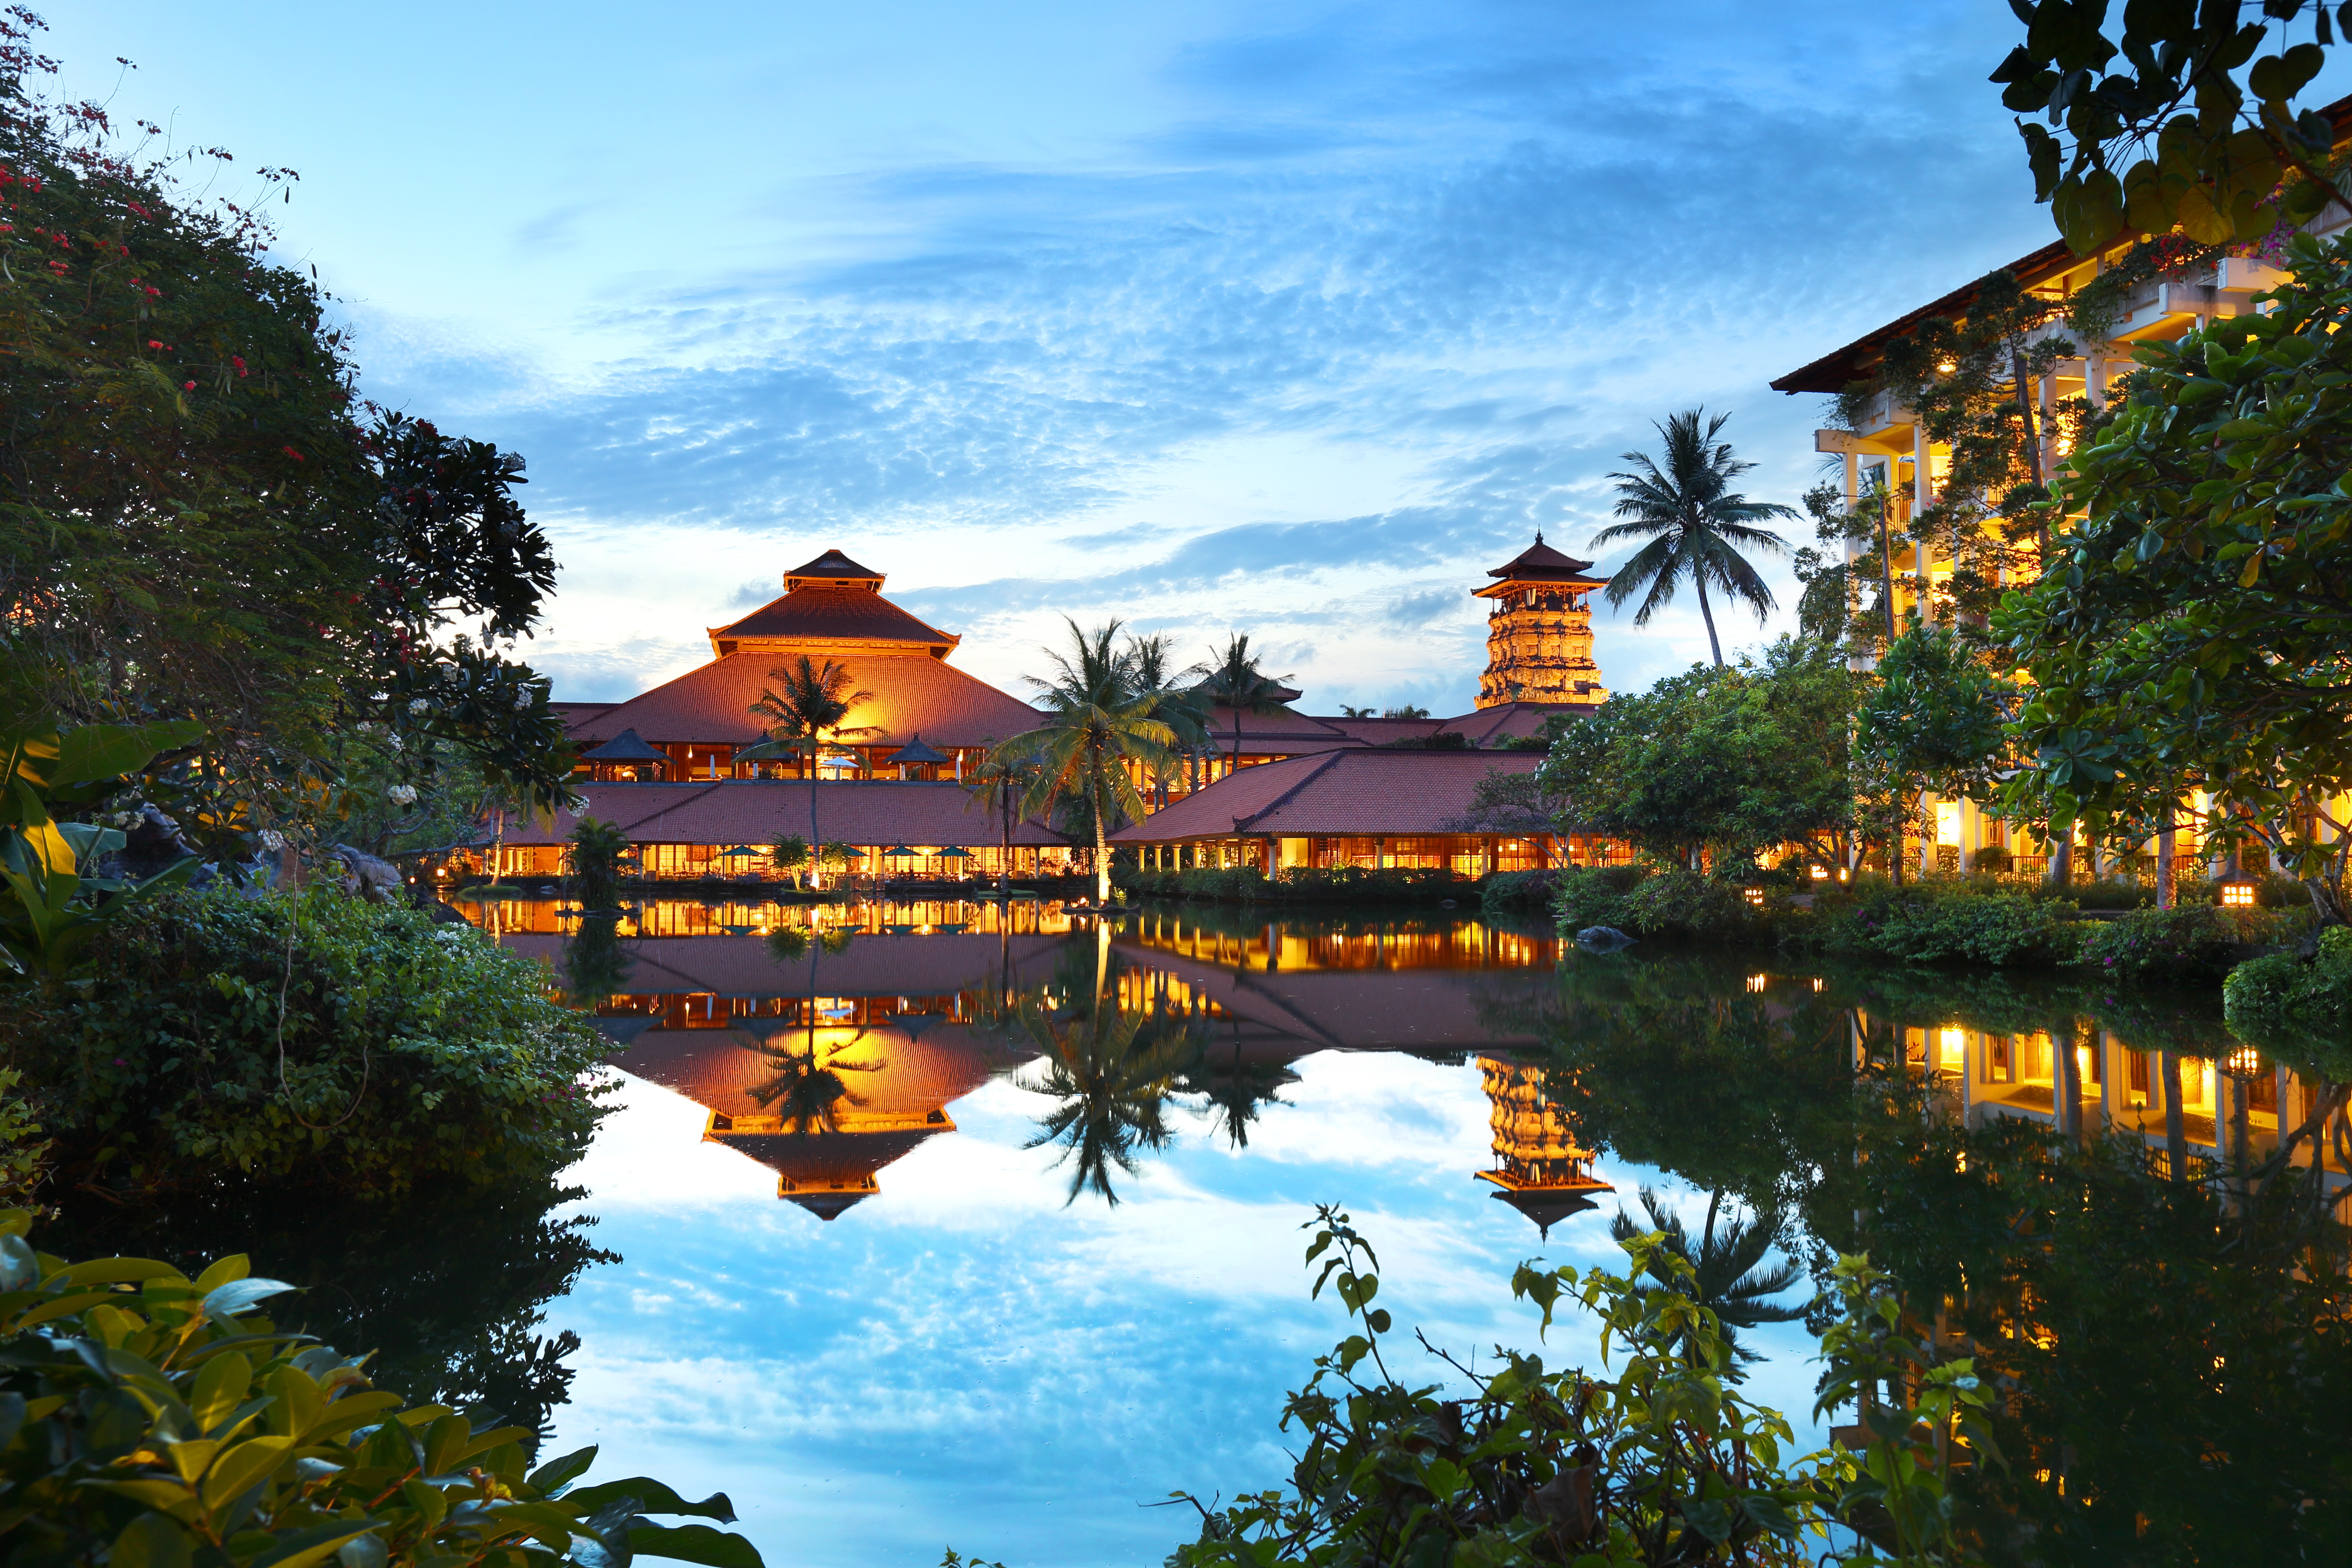 The Ayodya Resort - Lagoon in the evening